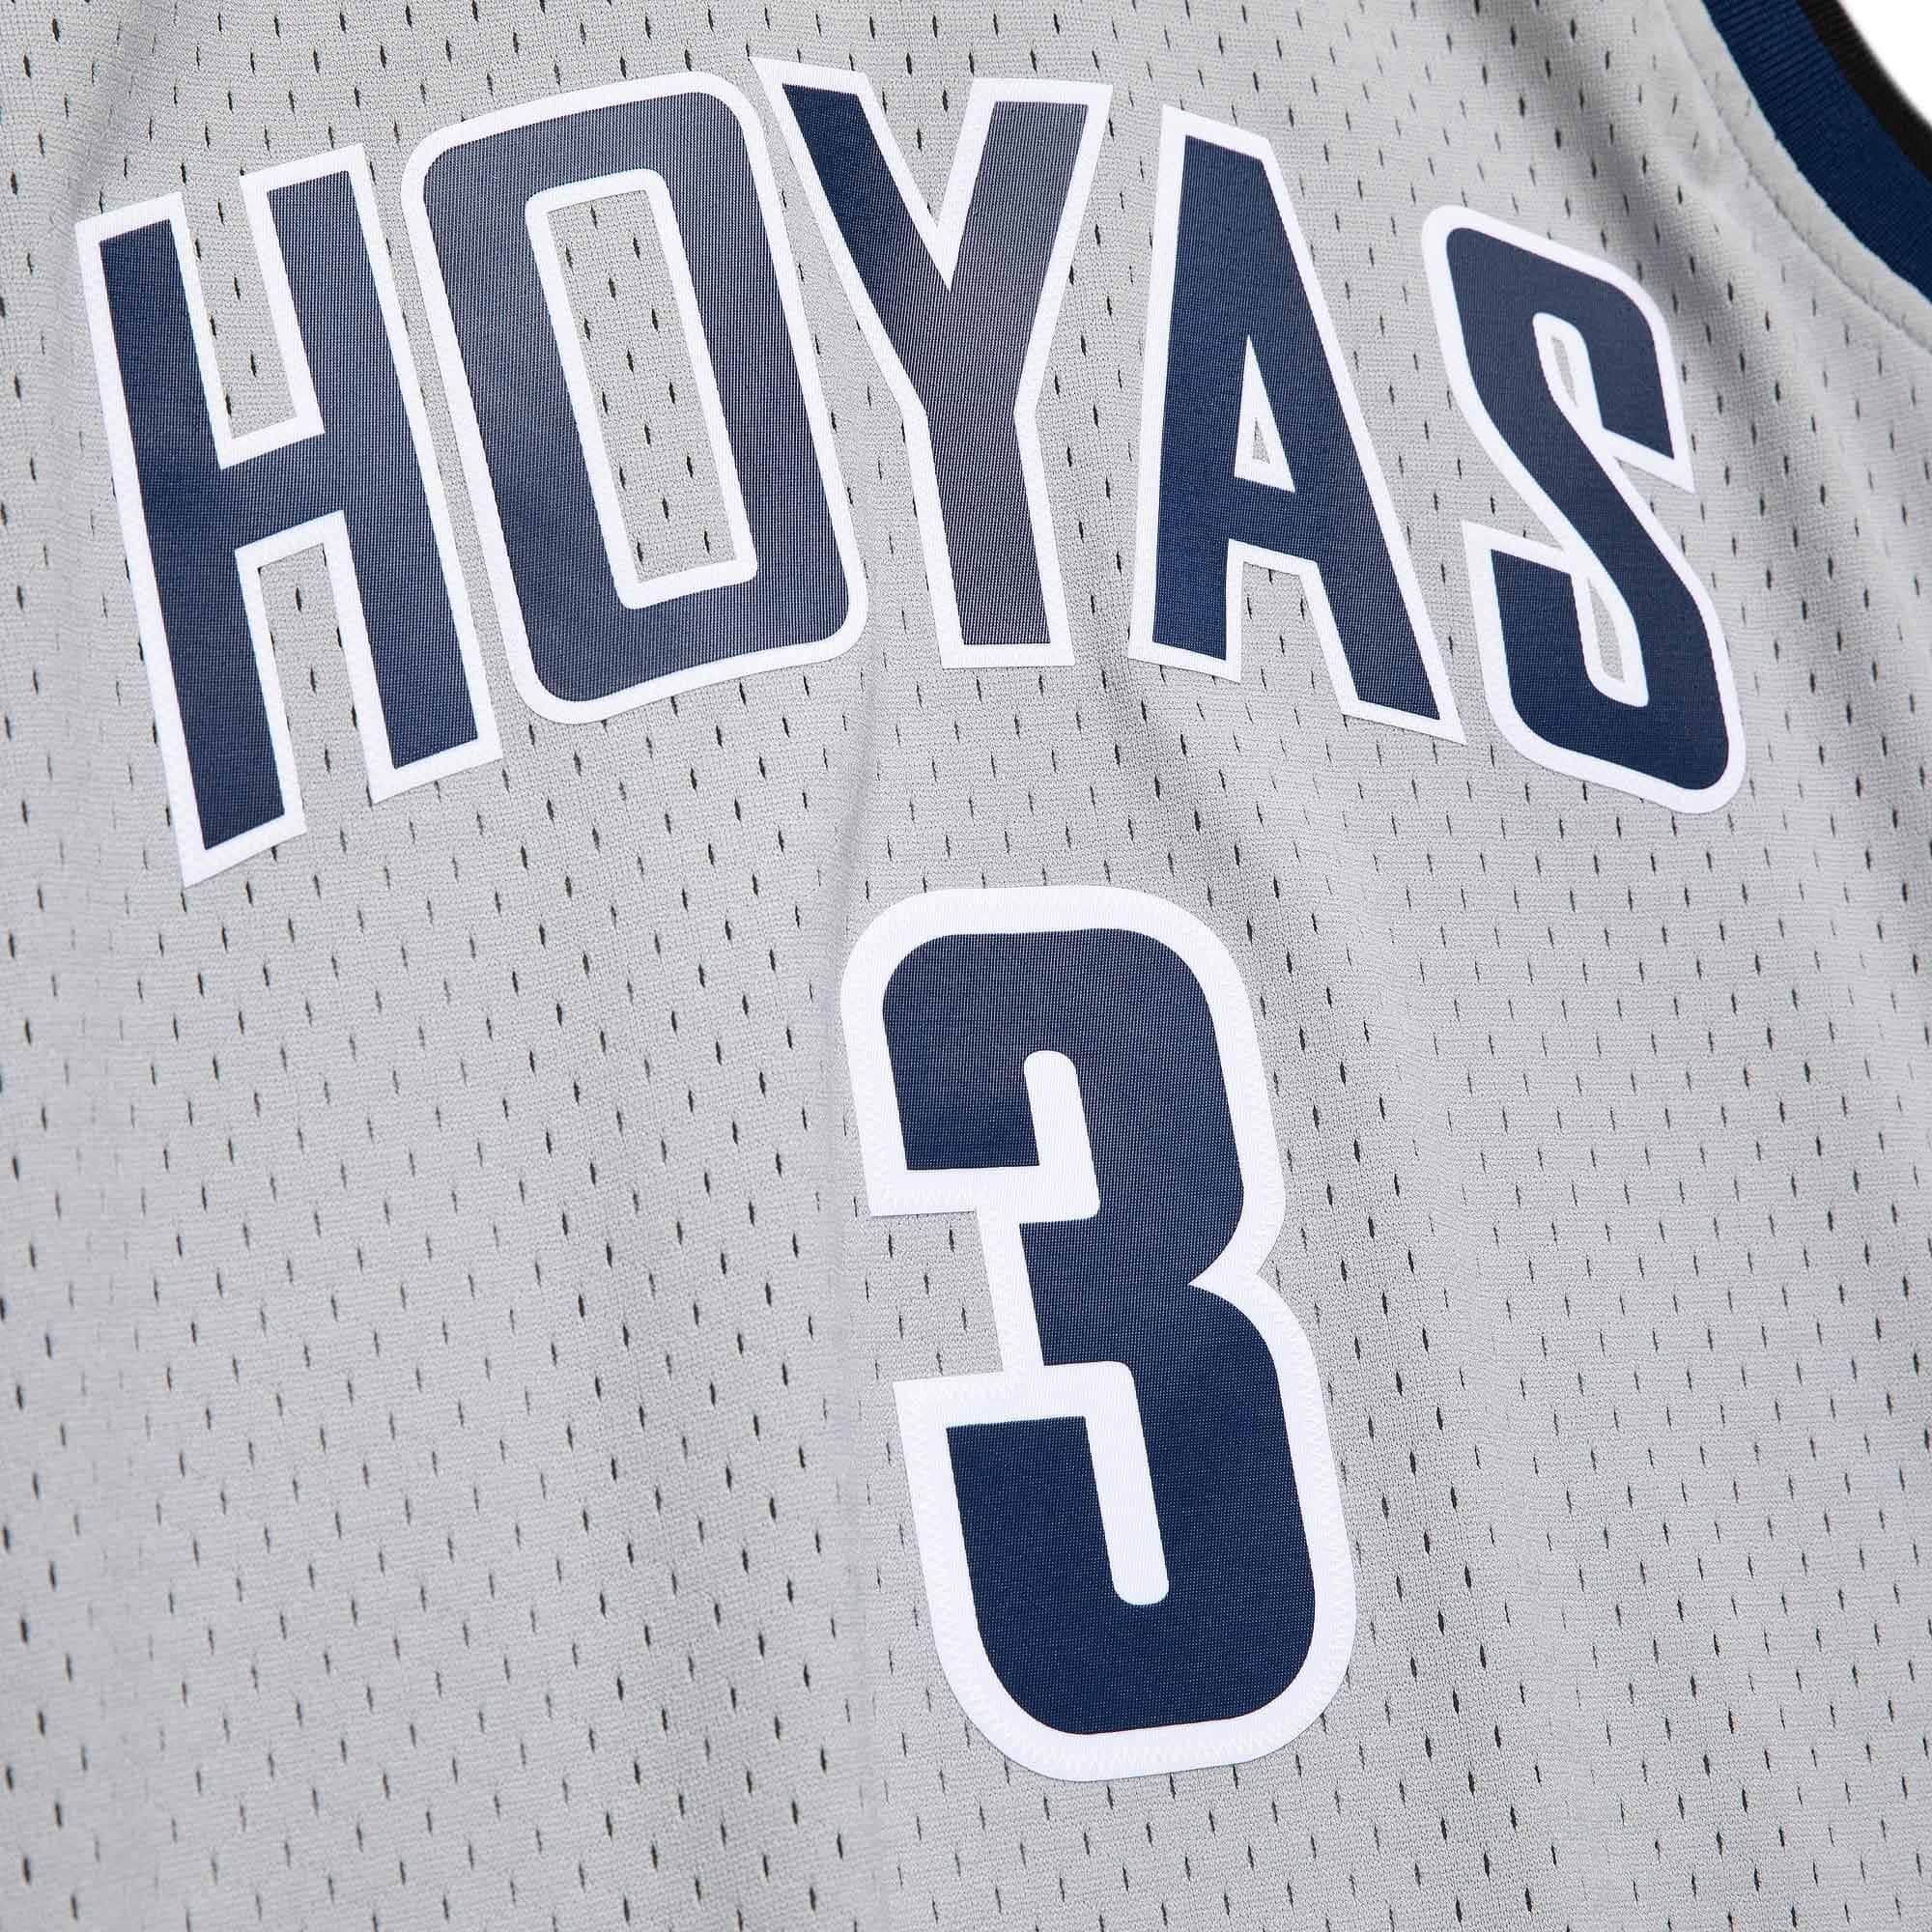 Vintage Nike NCAA Georgetown Hoyas Allen Iverson Basketball Jersey